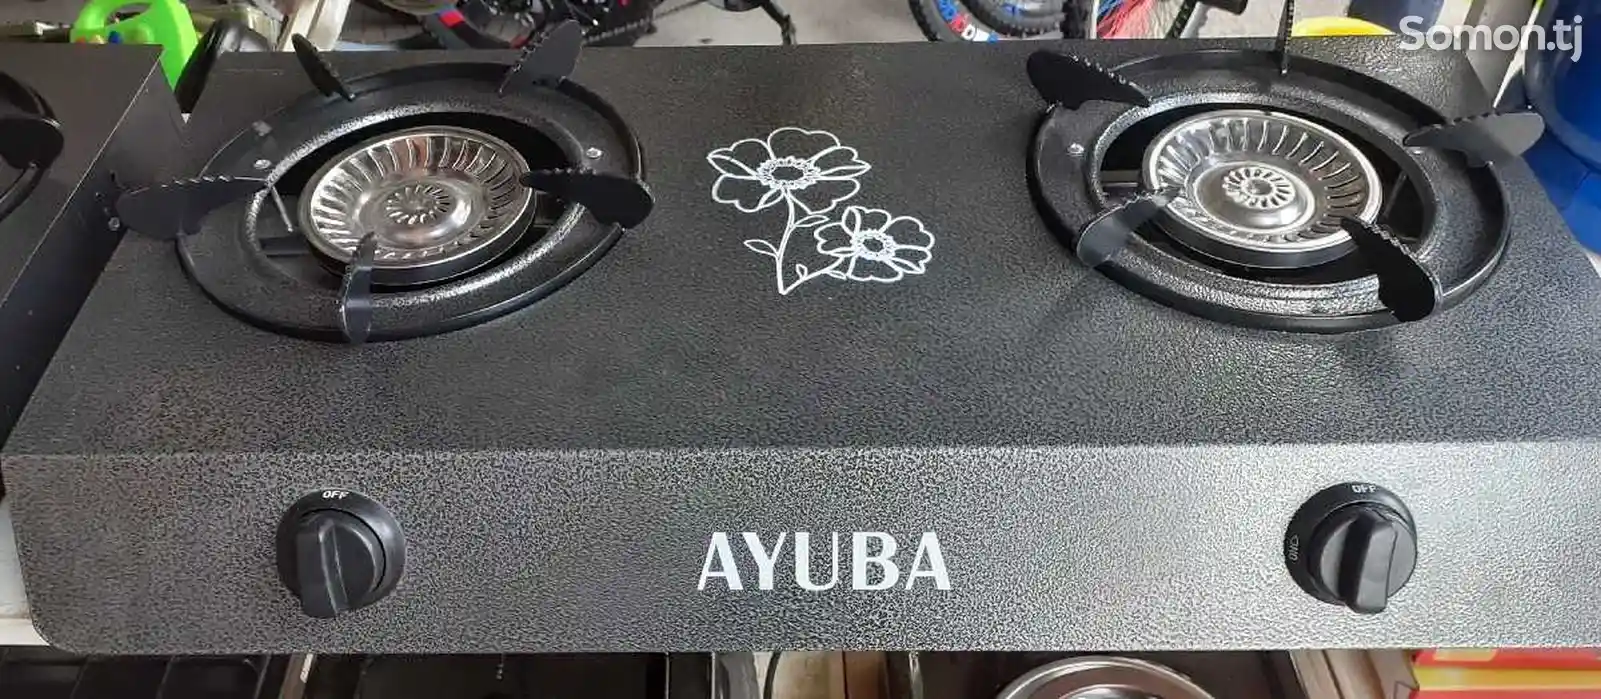 Электроплита Ayuba